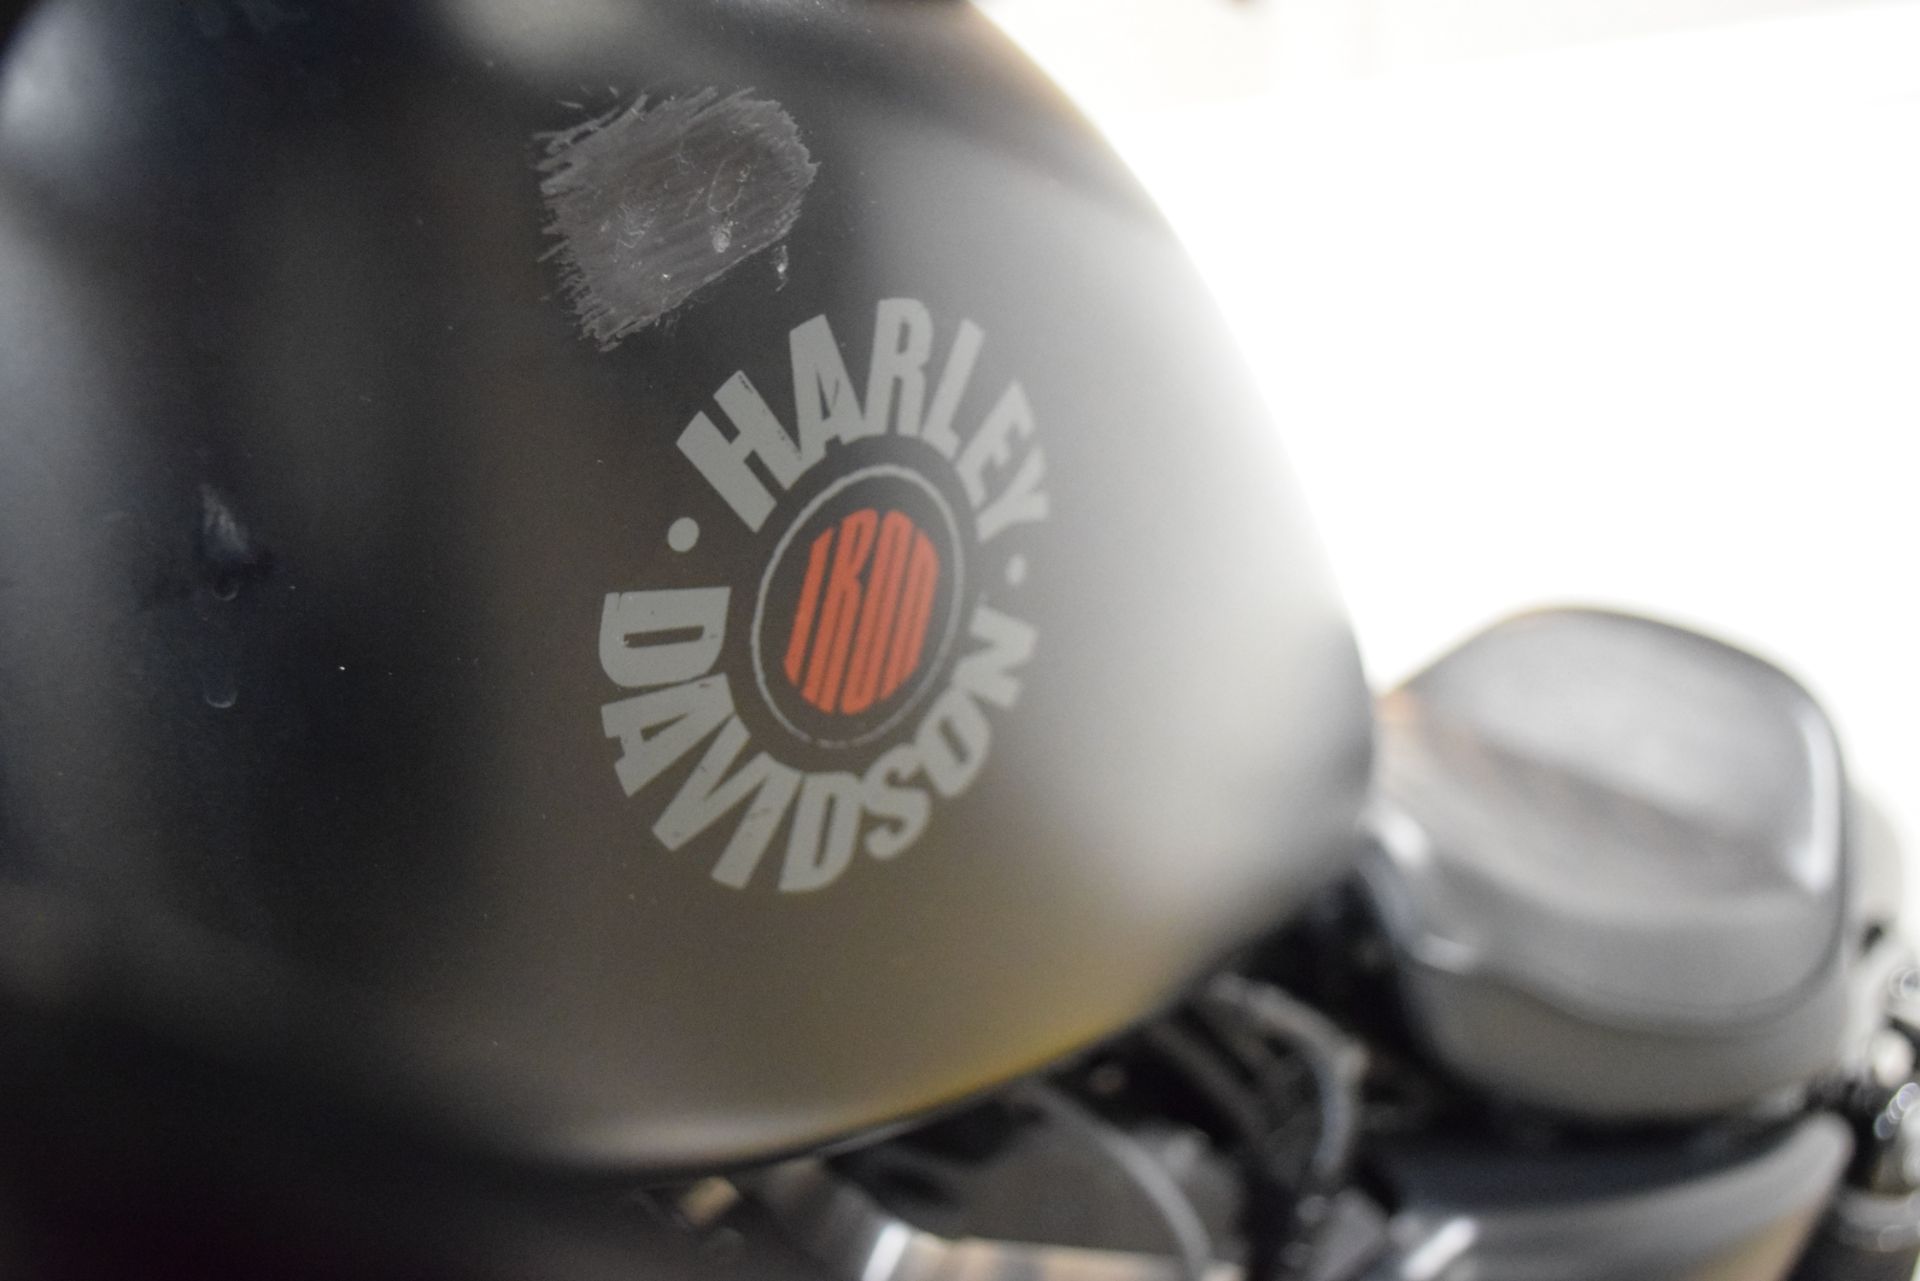 2019 Harley-Davidson Iron 883™ in Wauconda, Illinois - Photo 20